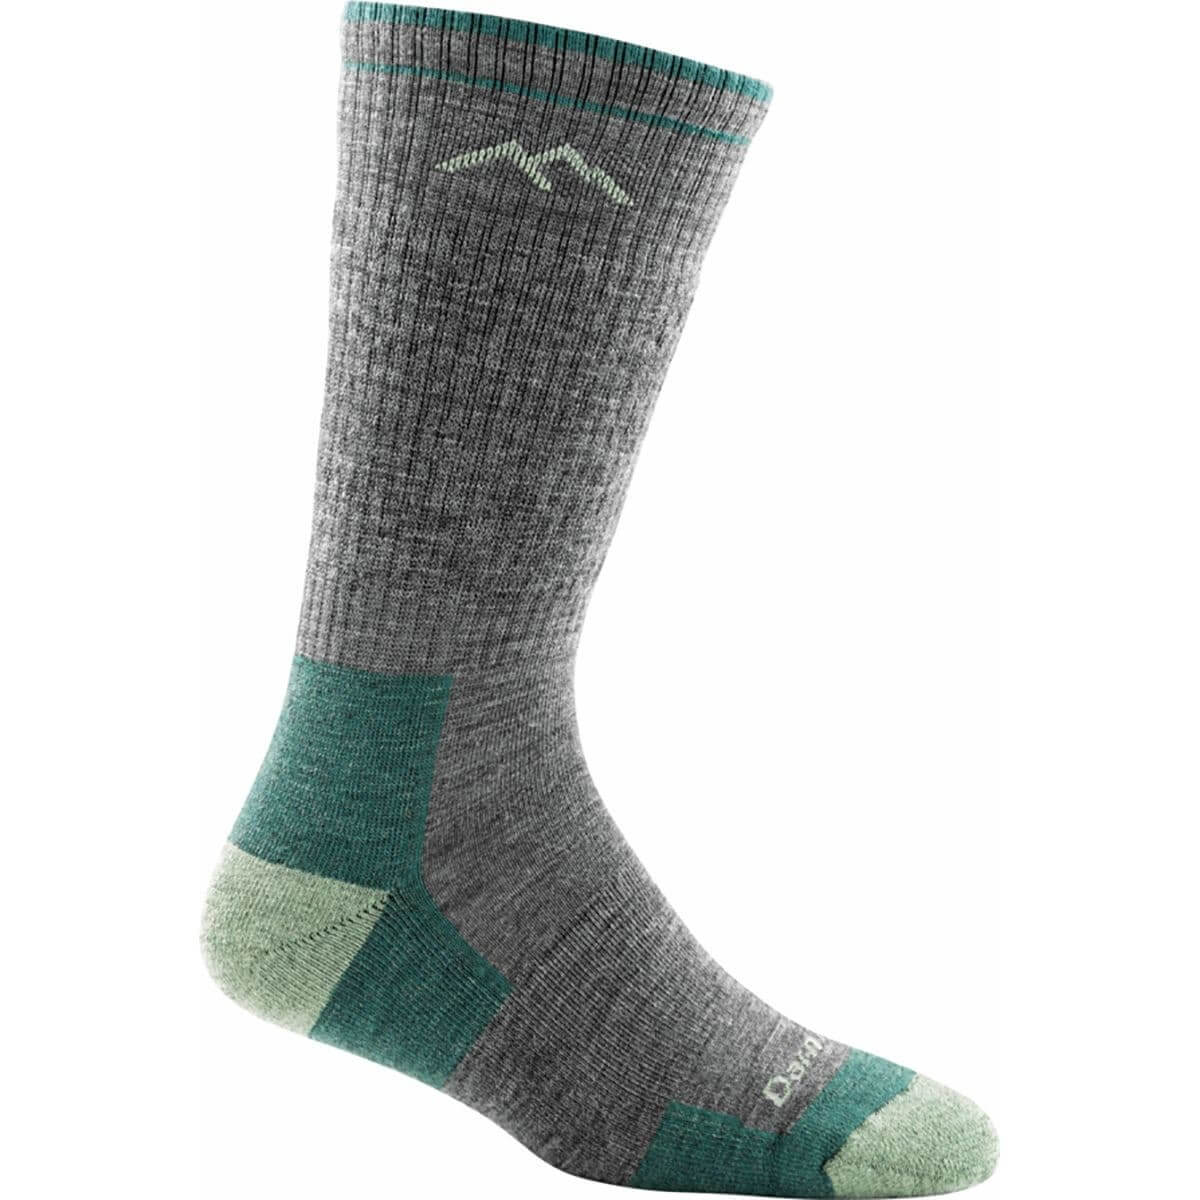 Носки женские Darn Tough Hiker Boot Cushion, серый/мультиколор christmas compression sock 5 or 6 pairs per set sock sport christmas gift sock